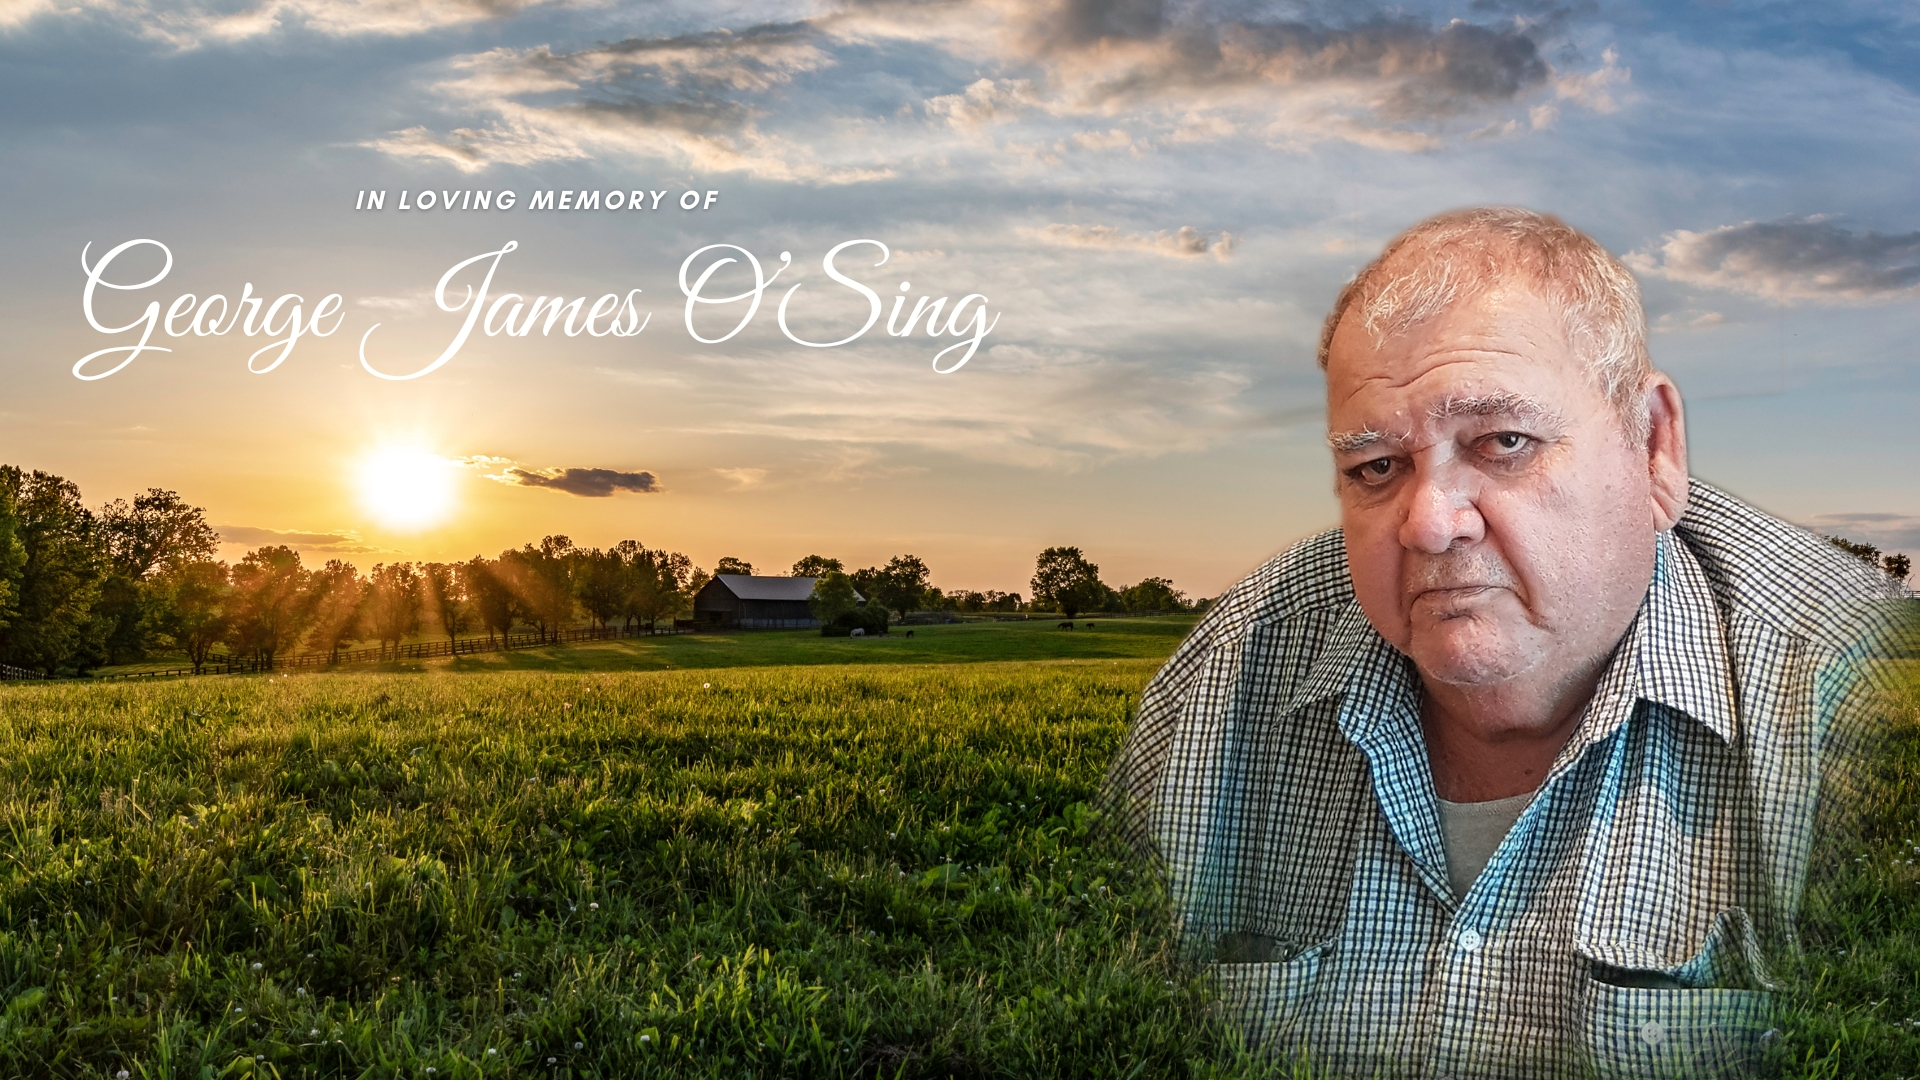 George James O'Sing